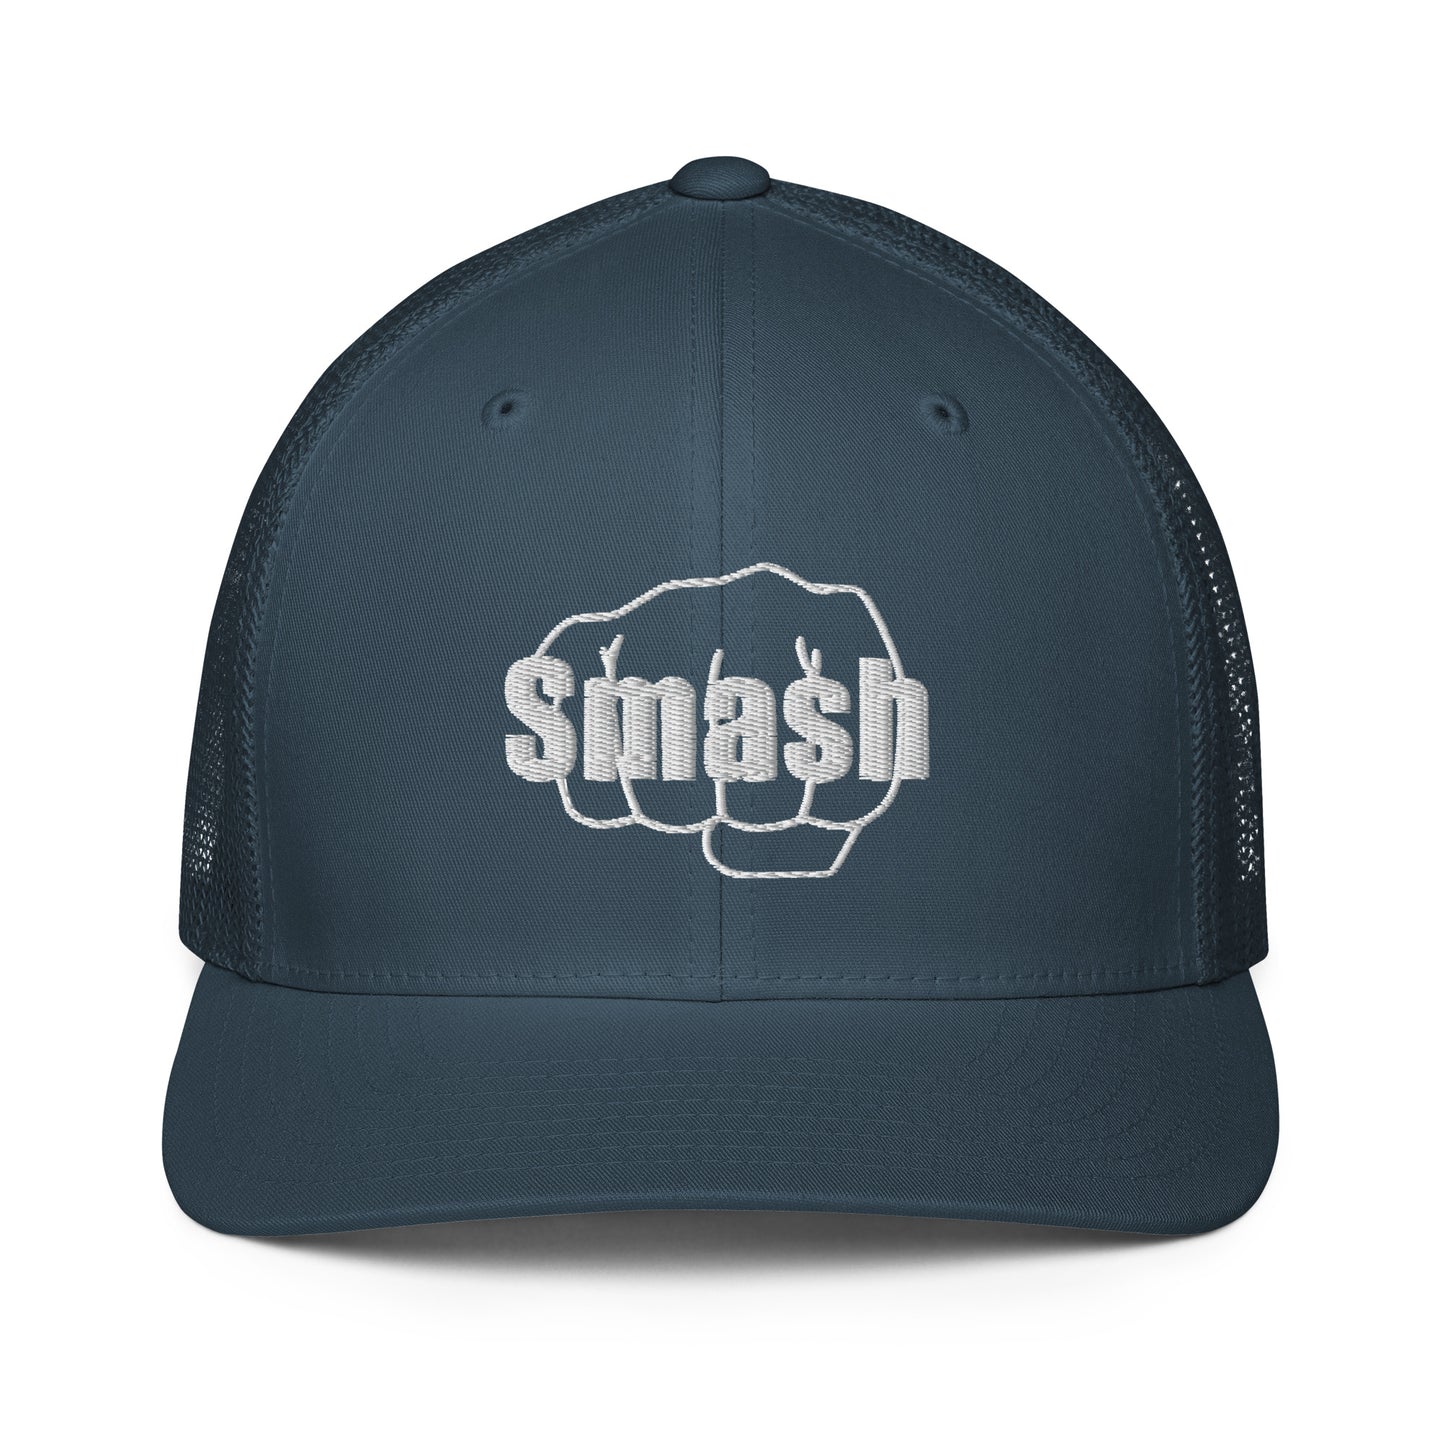 Smash Fist Flex Fit Mesh back trucker cap